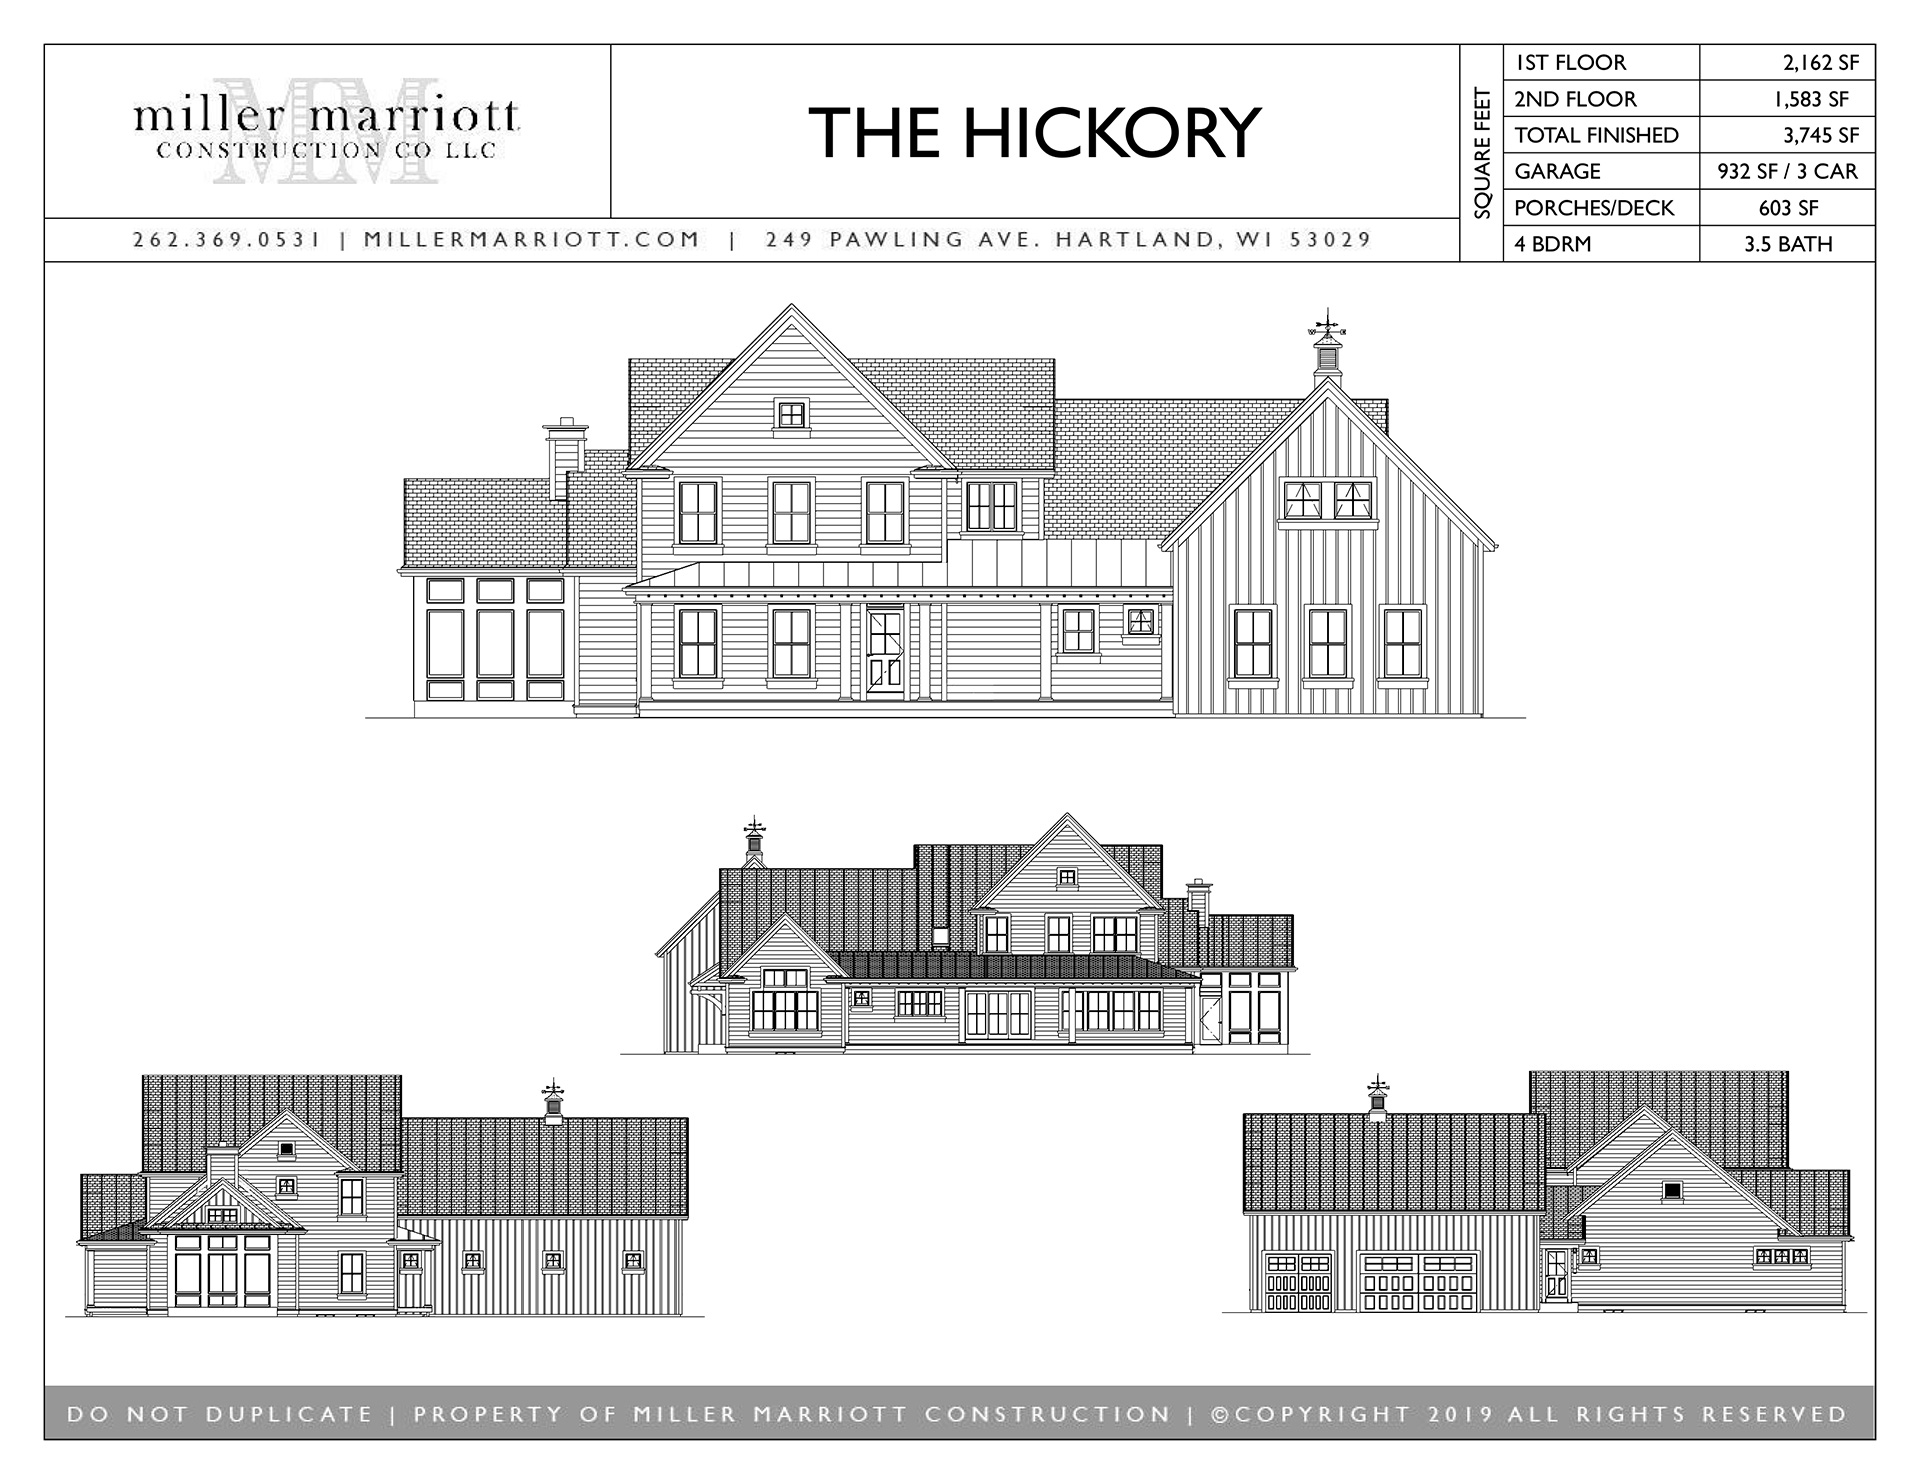 The Hickory exterior plan